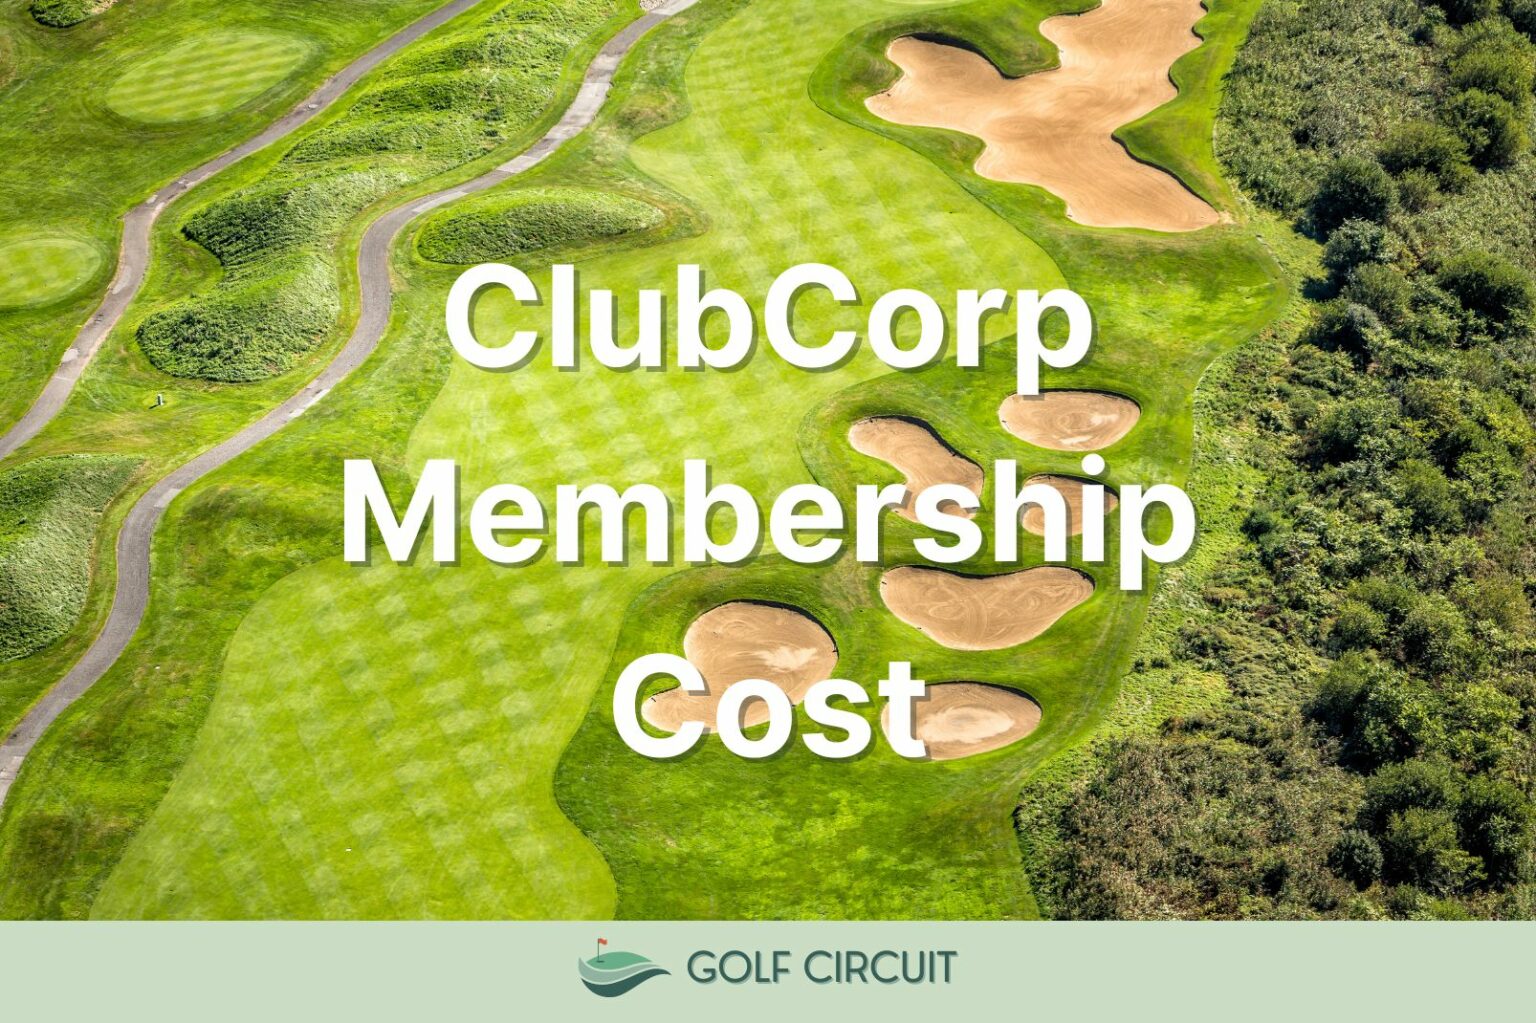 Clubcorp Membership Cost 2 1536x1023 